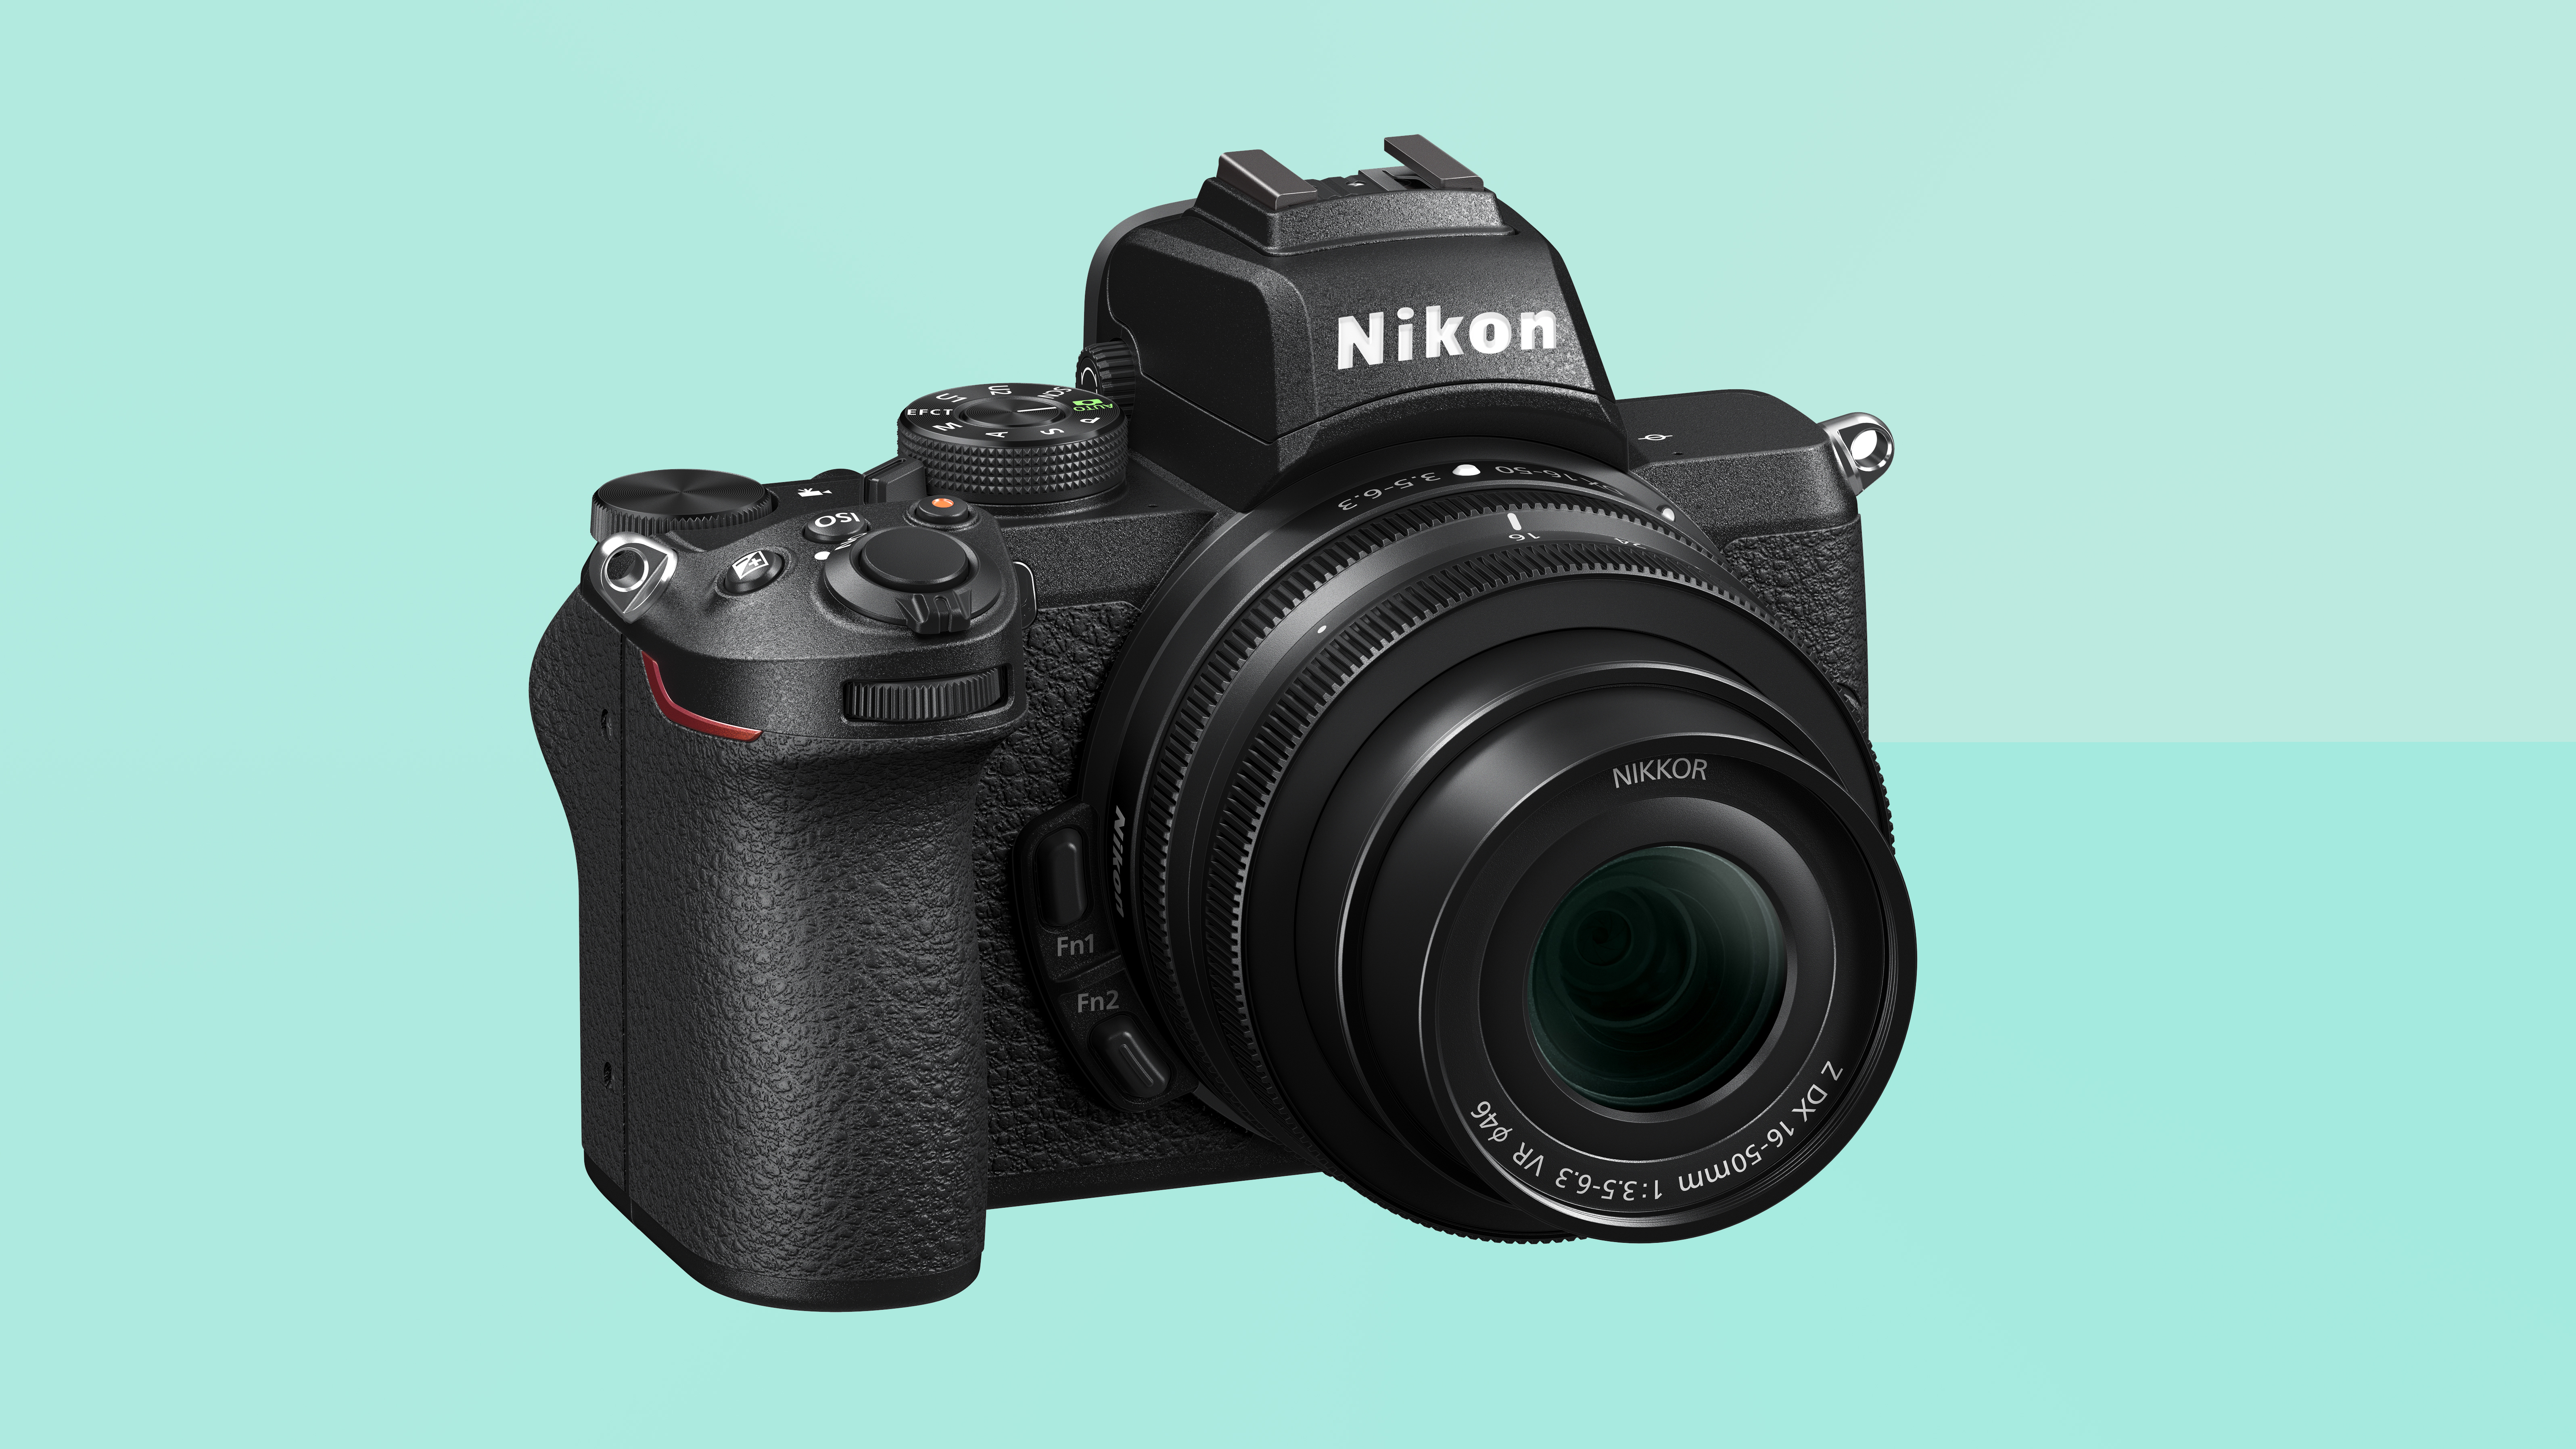 Nikon's Z50 DX-format mirrorless camera performs impressively on